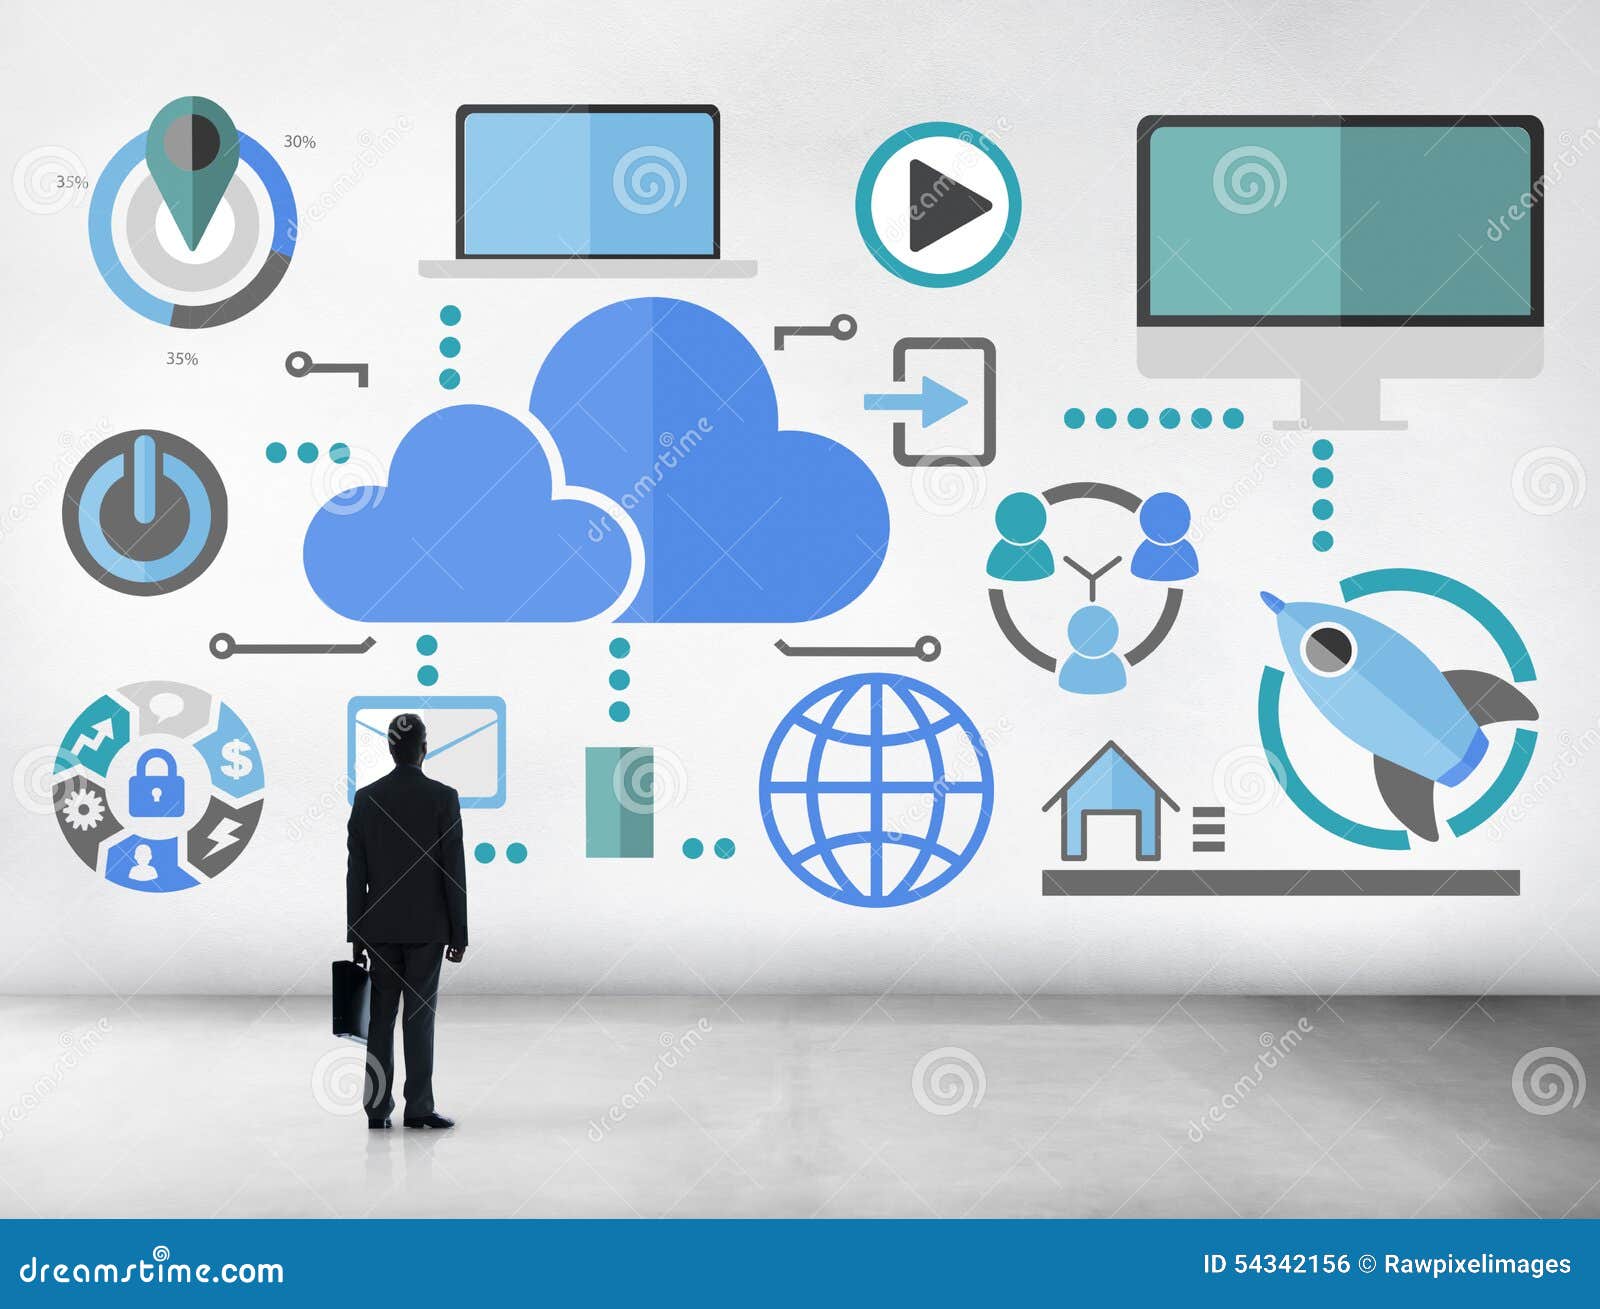 big data sharing online global communication cloud concept